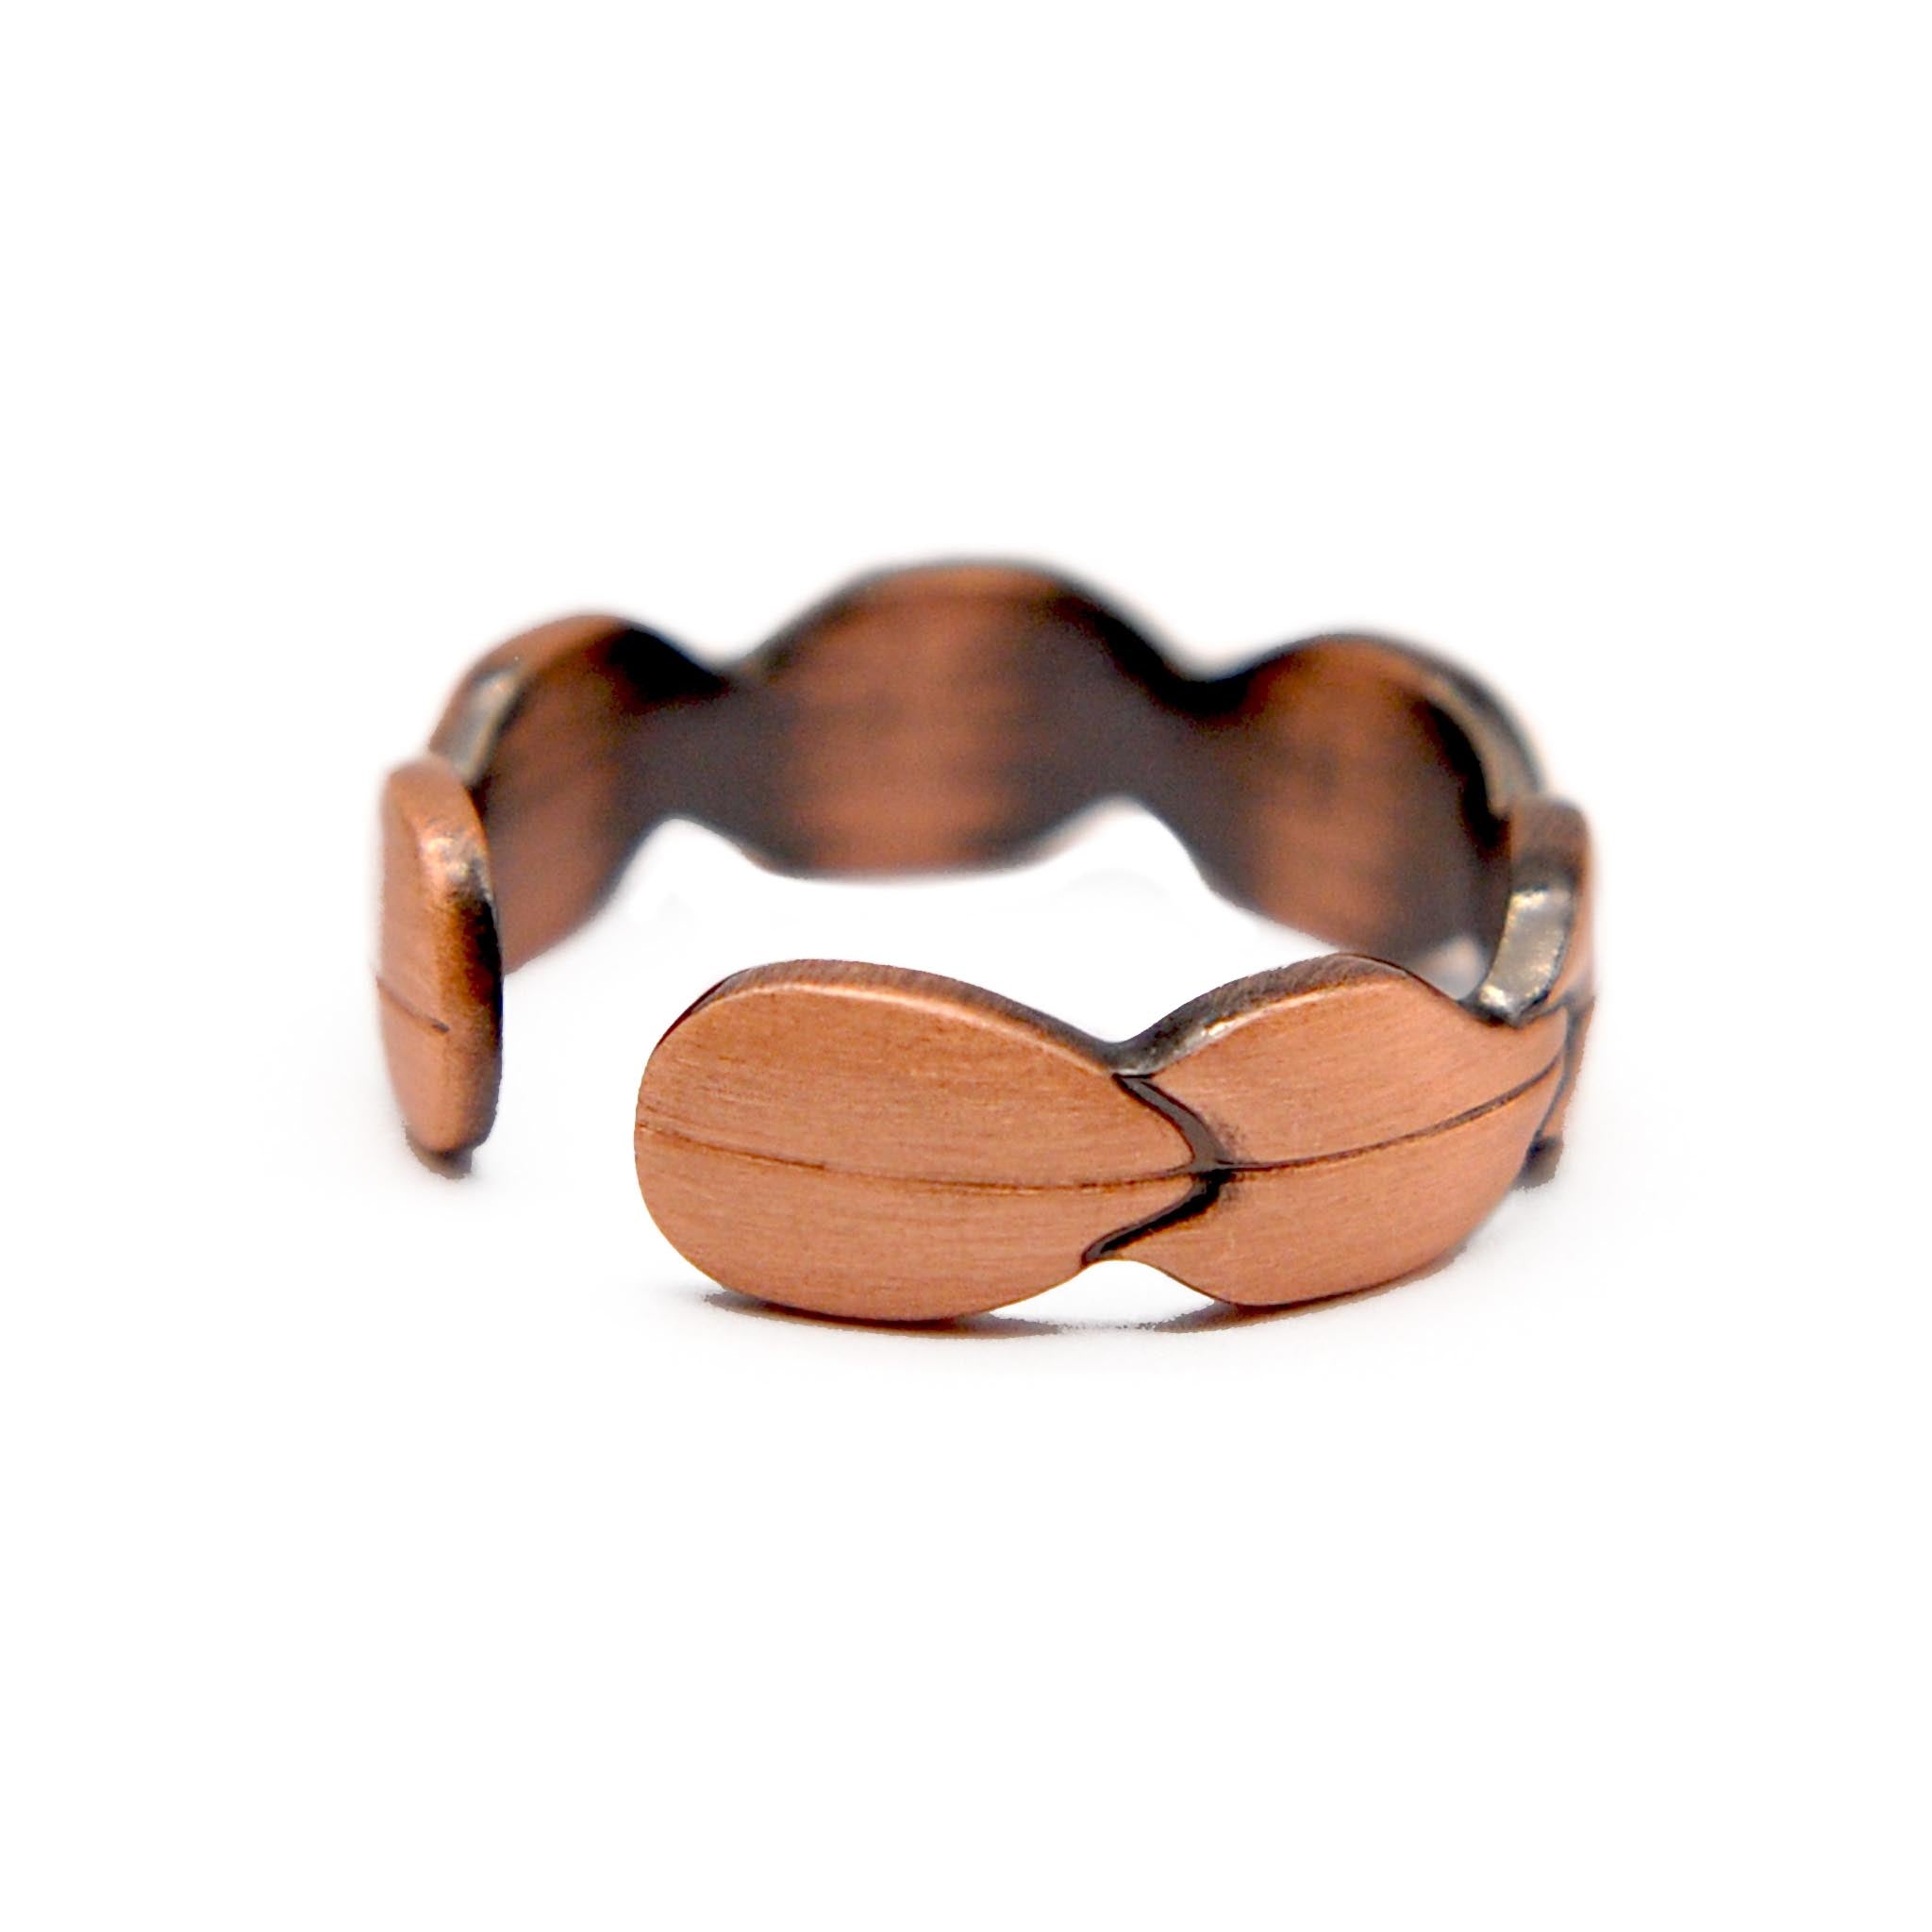 Copper ring for women